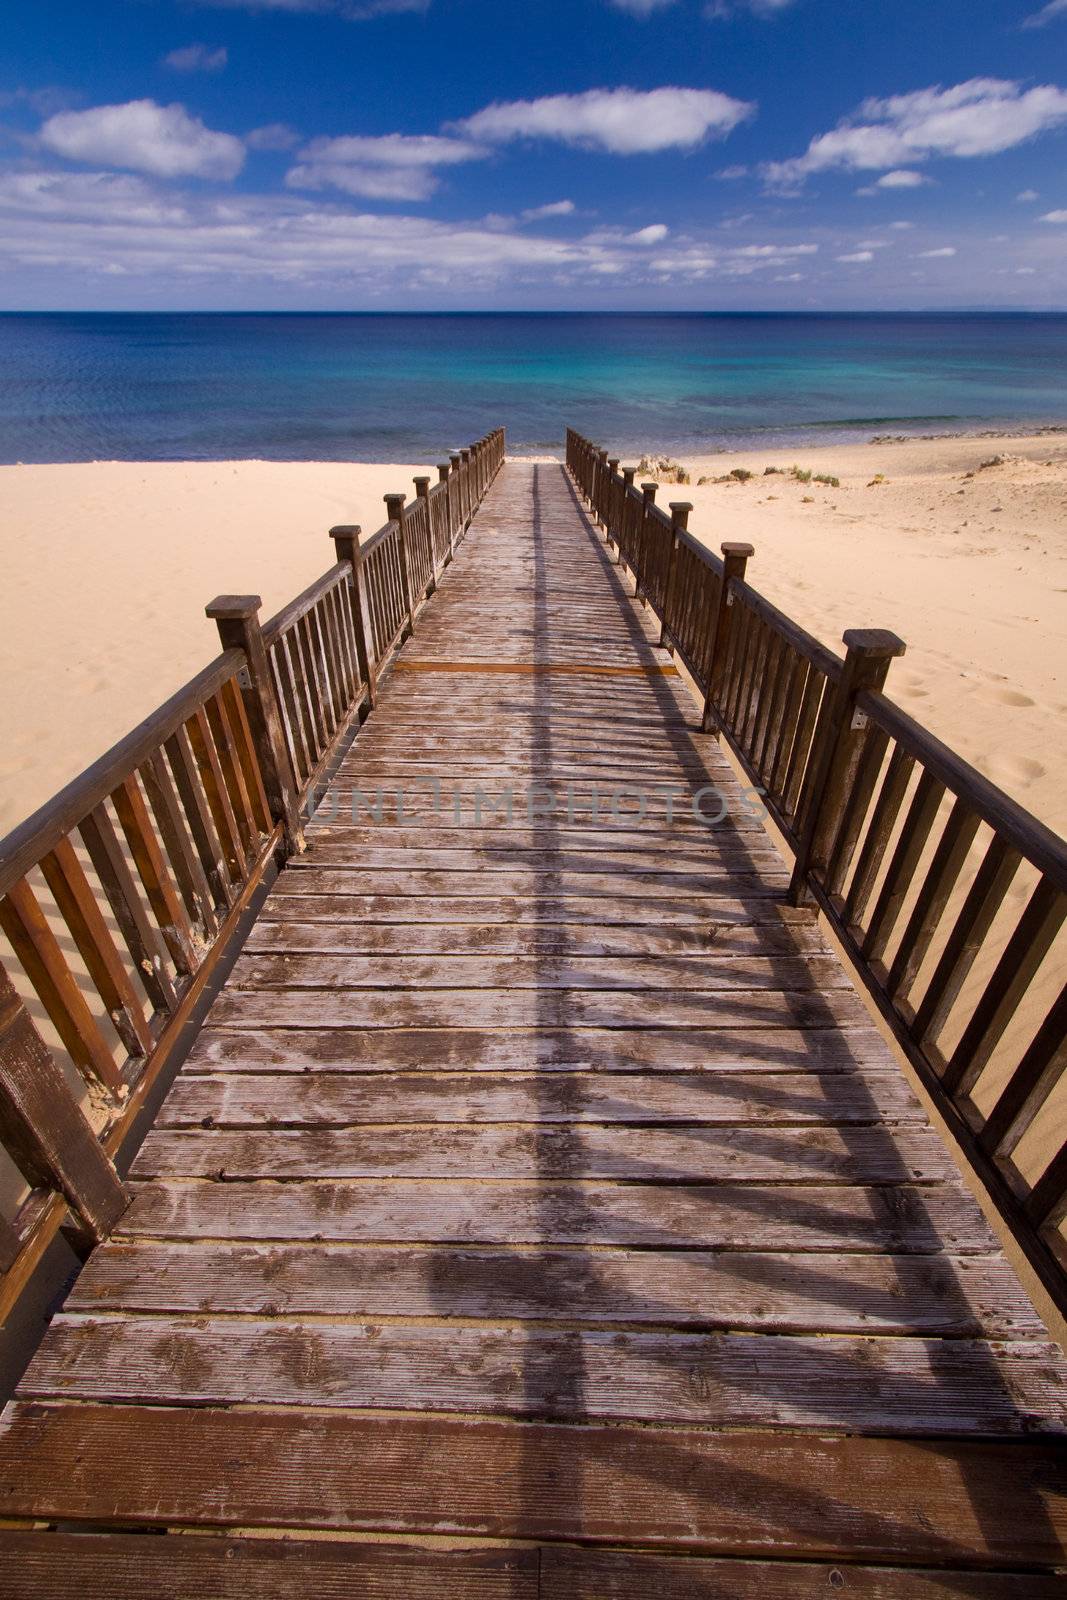 Wooden footbridge on the beach by Gbuglok